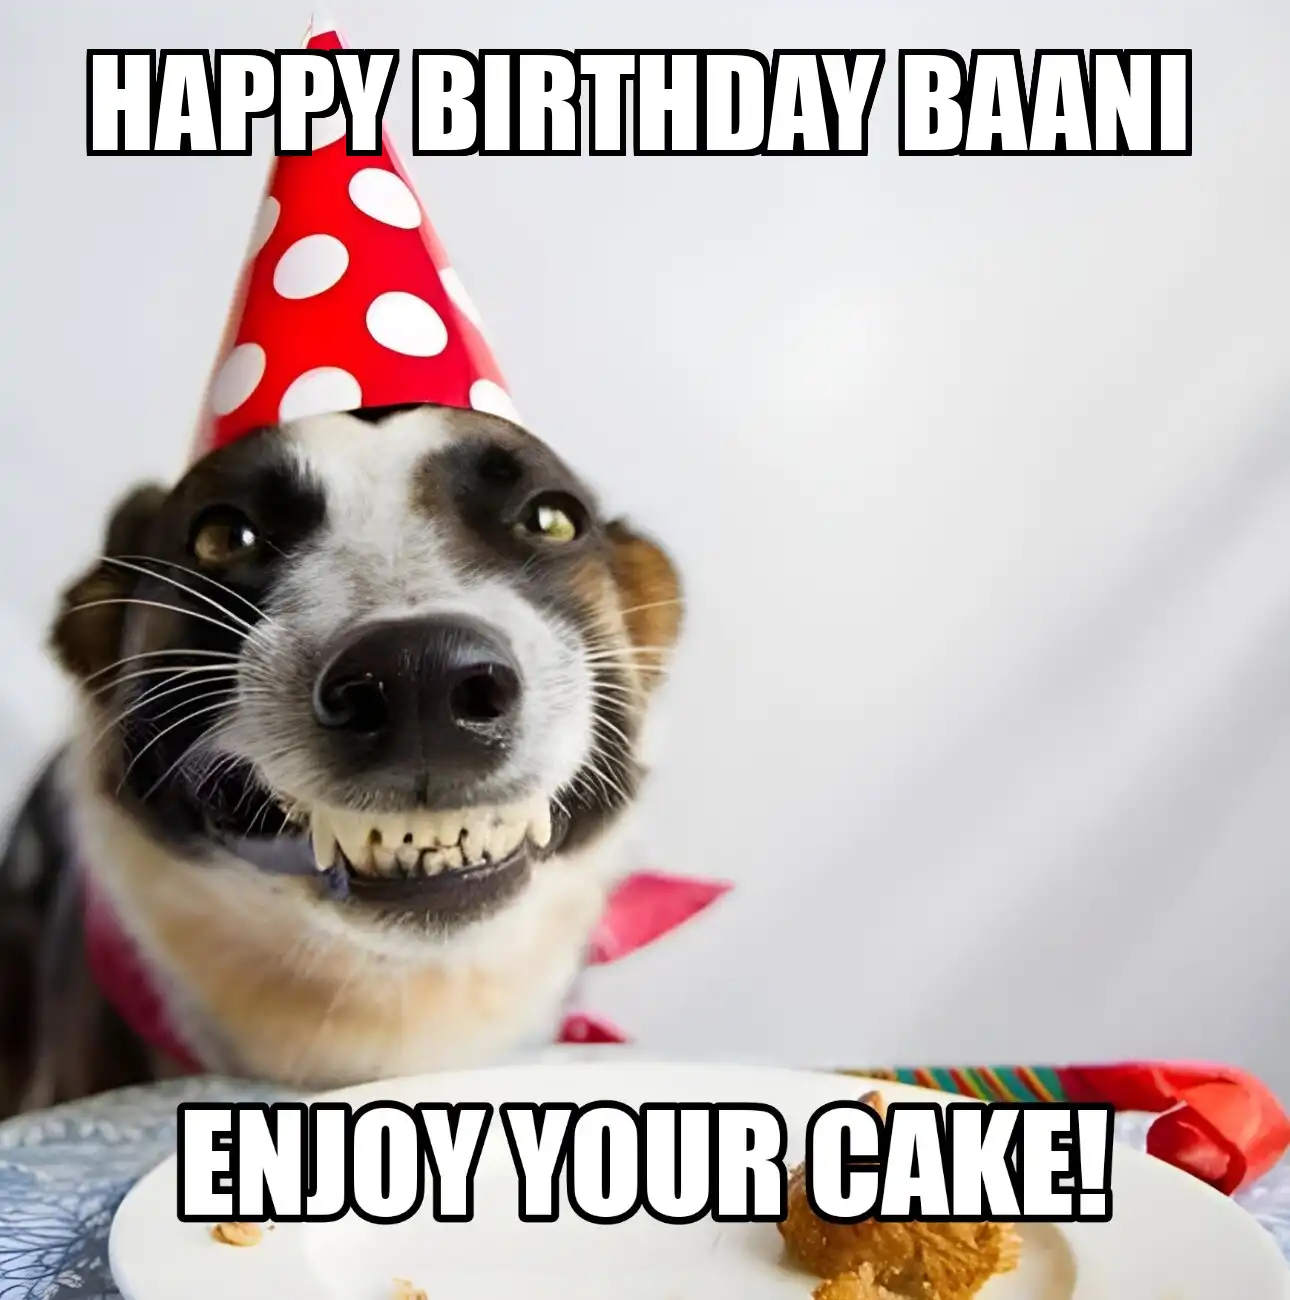 Happy Birthday Baani Enjoy Your Cake Dog Meme